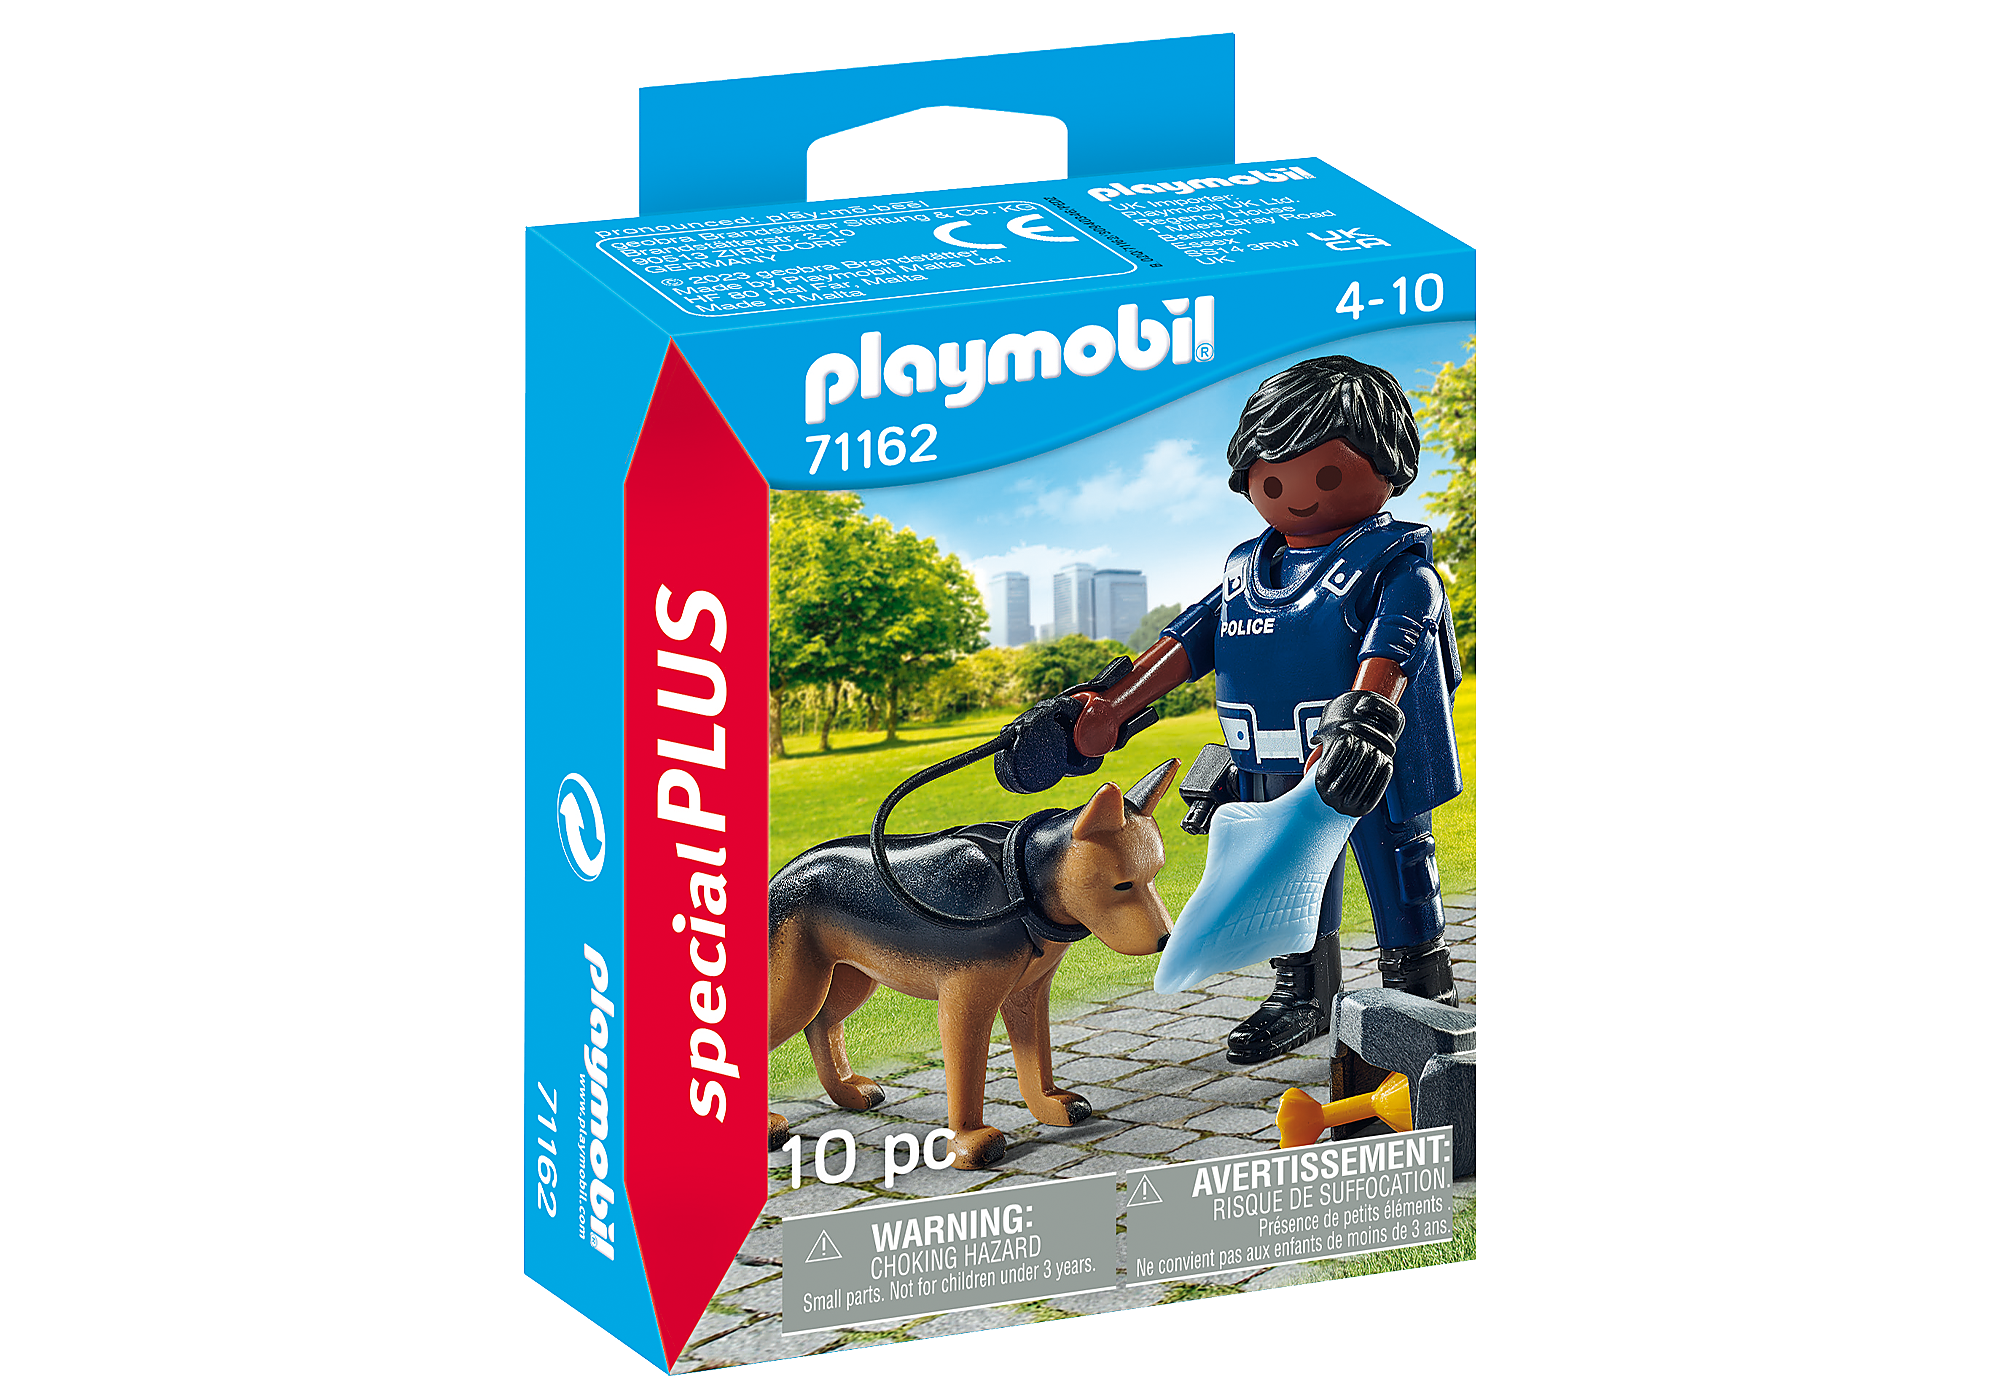 Playmobil Little Black Dog